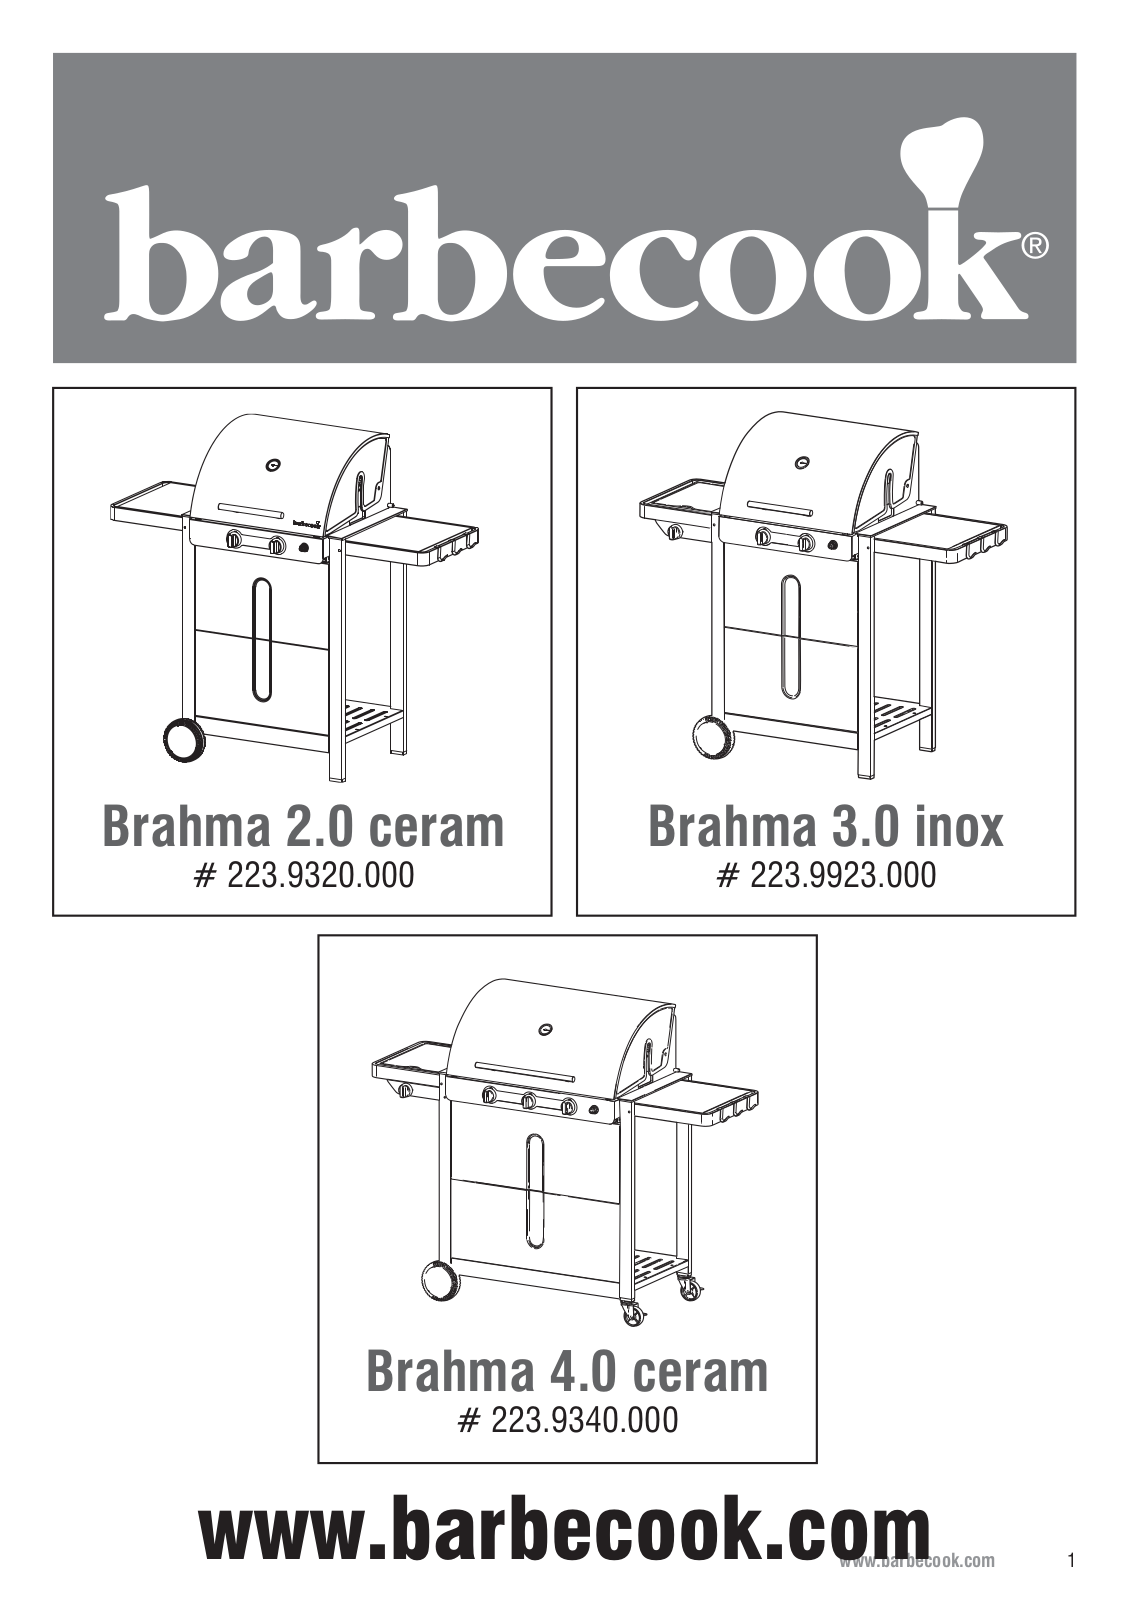 BARBECOOK Brahma 2.0 User Manual